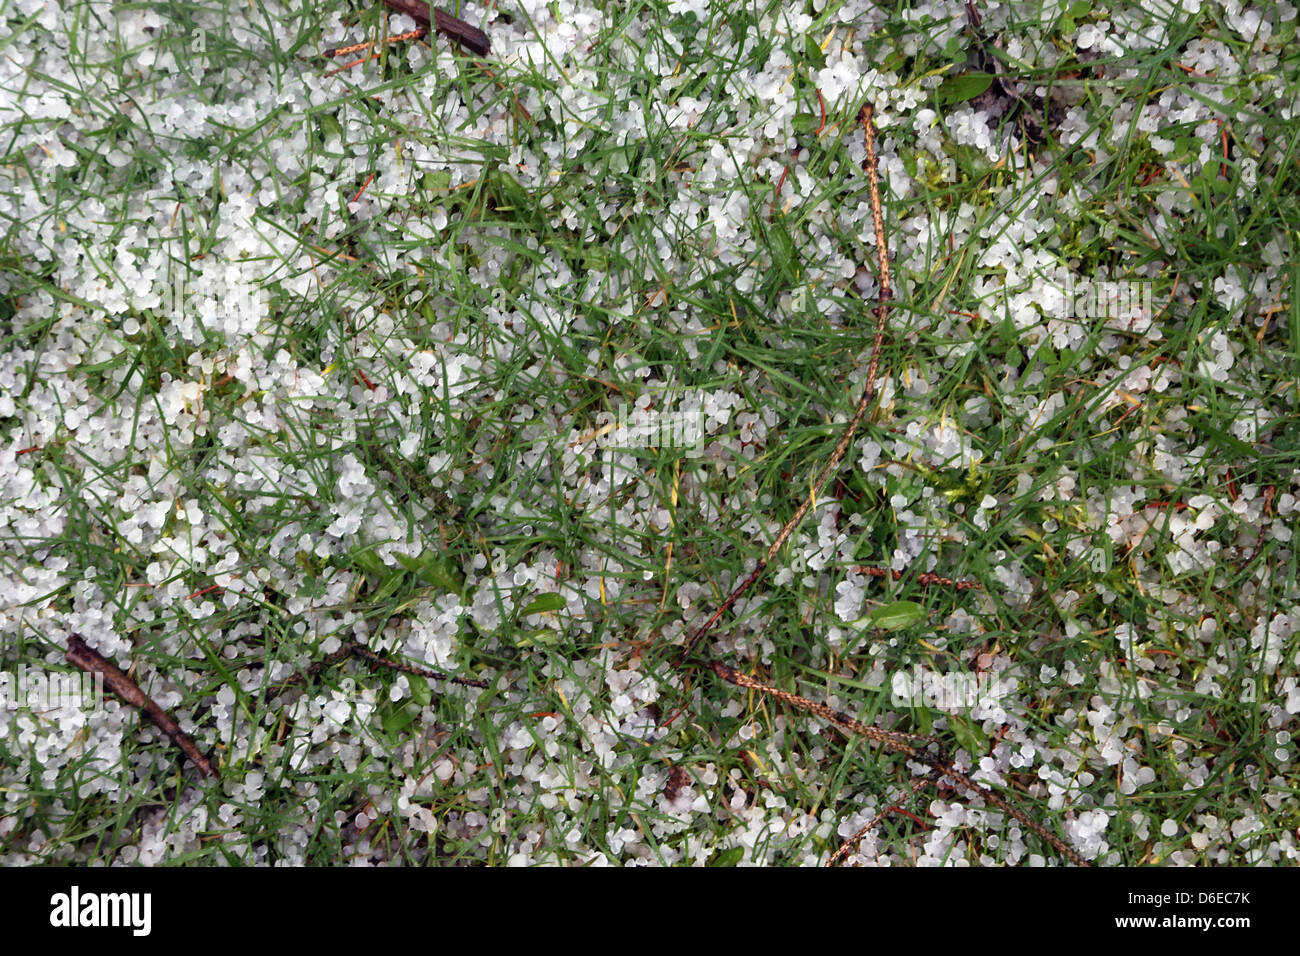 Hailstones On Grass After Hailstorm Surrey England Stock Photo